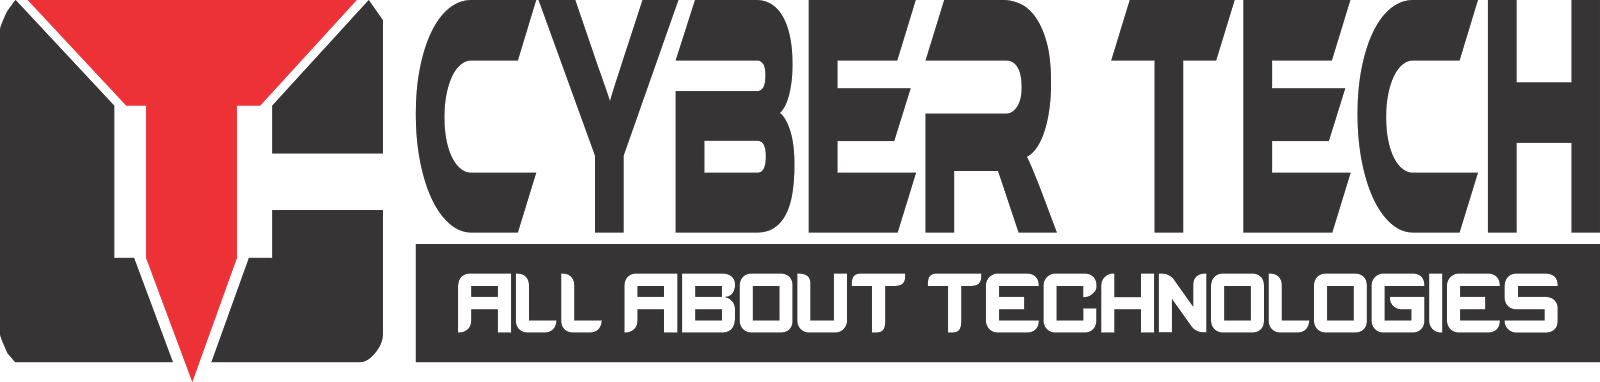 Cyber Tech's Blog